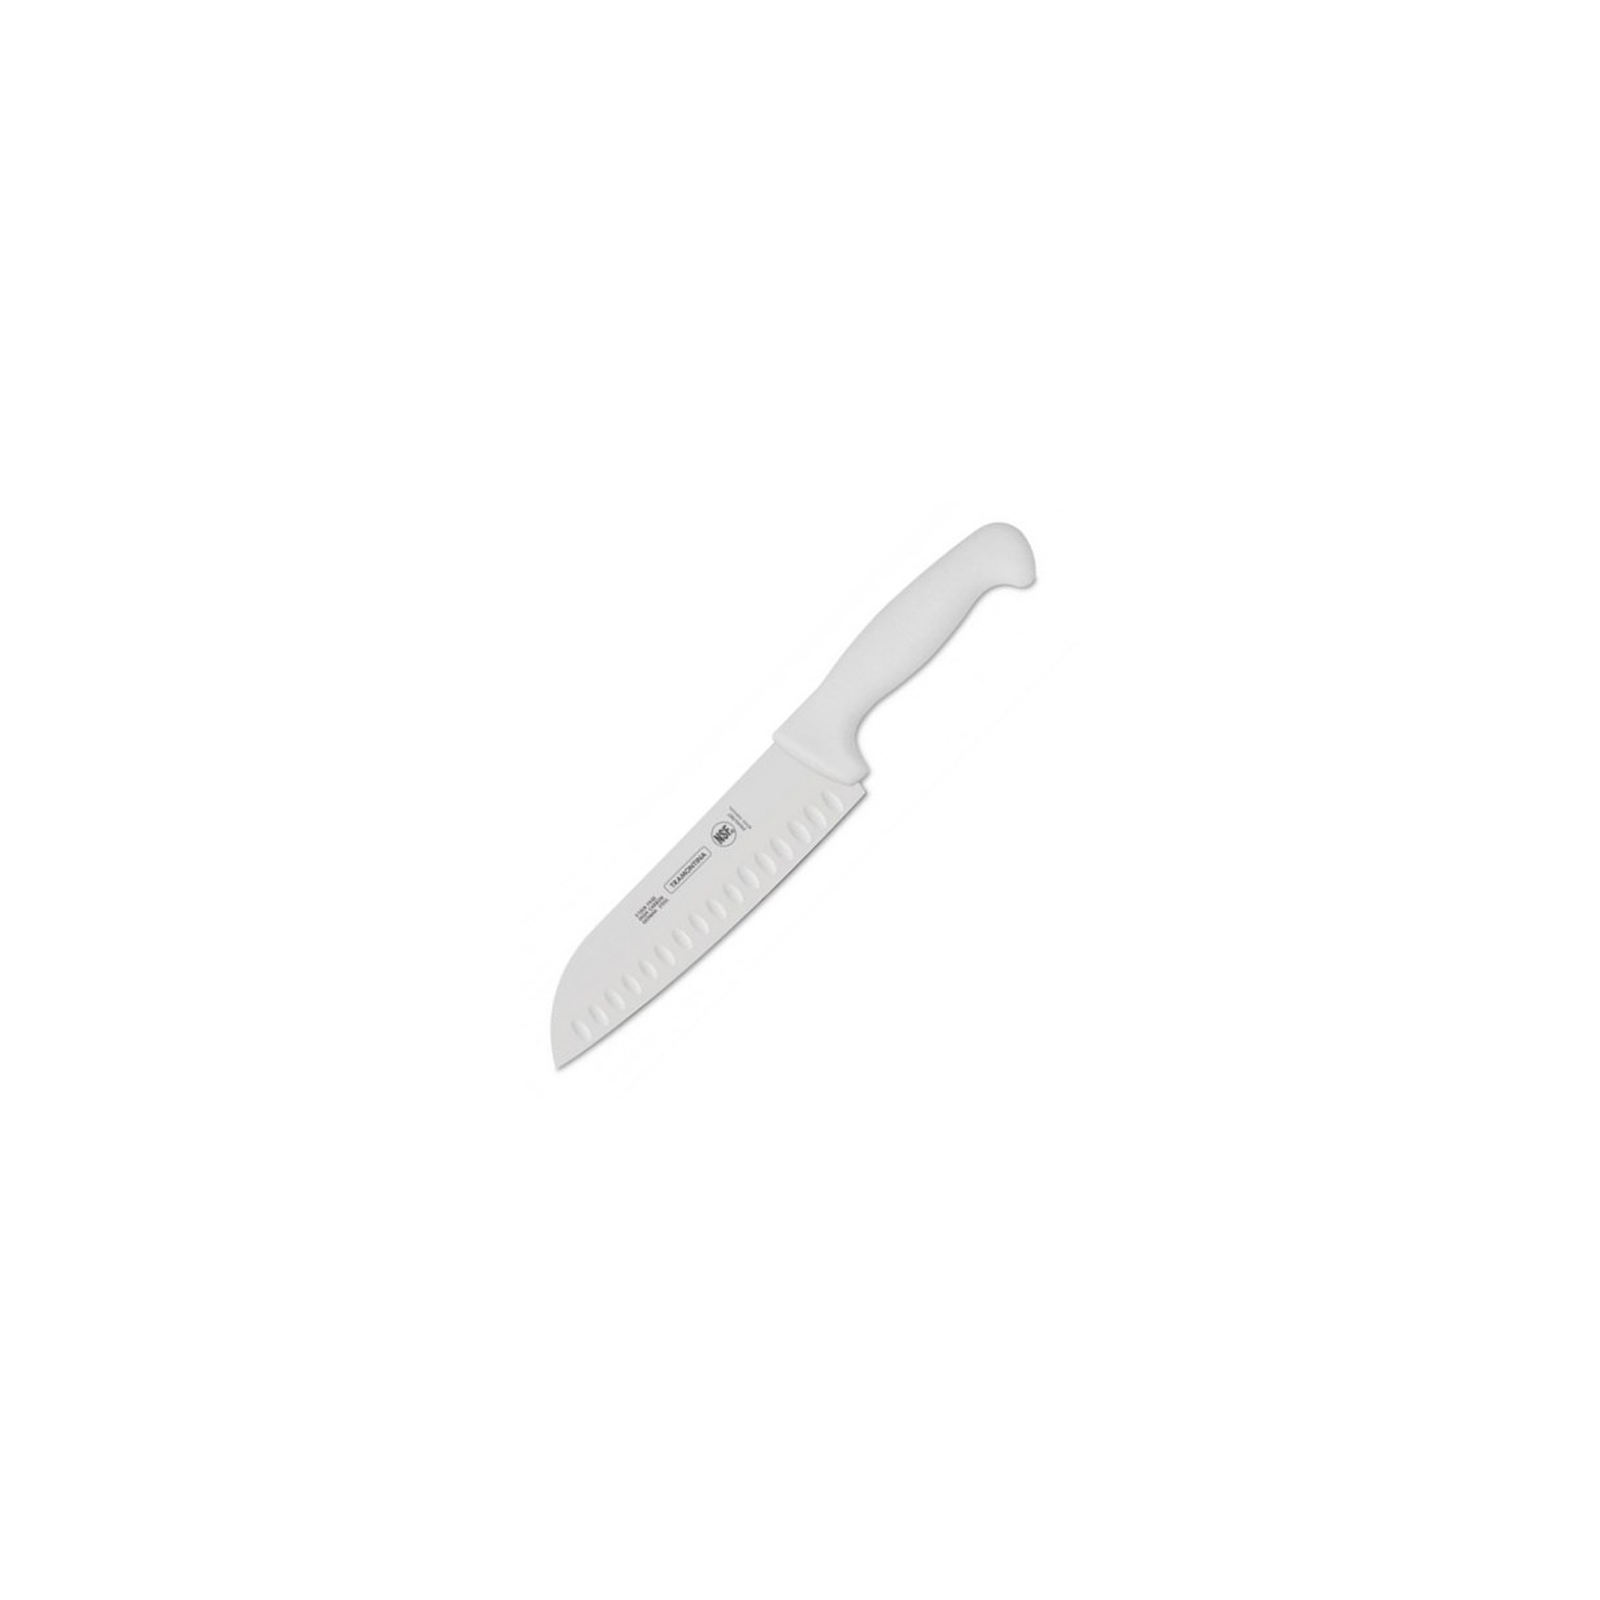 Кухонный нож Tramontina Professional Master Сантоку 178 мм White (24646/087)